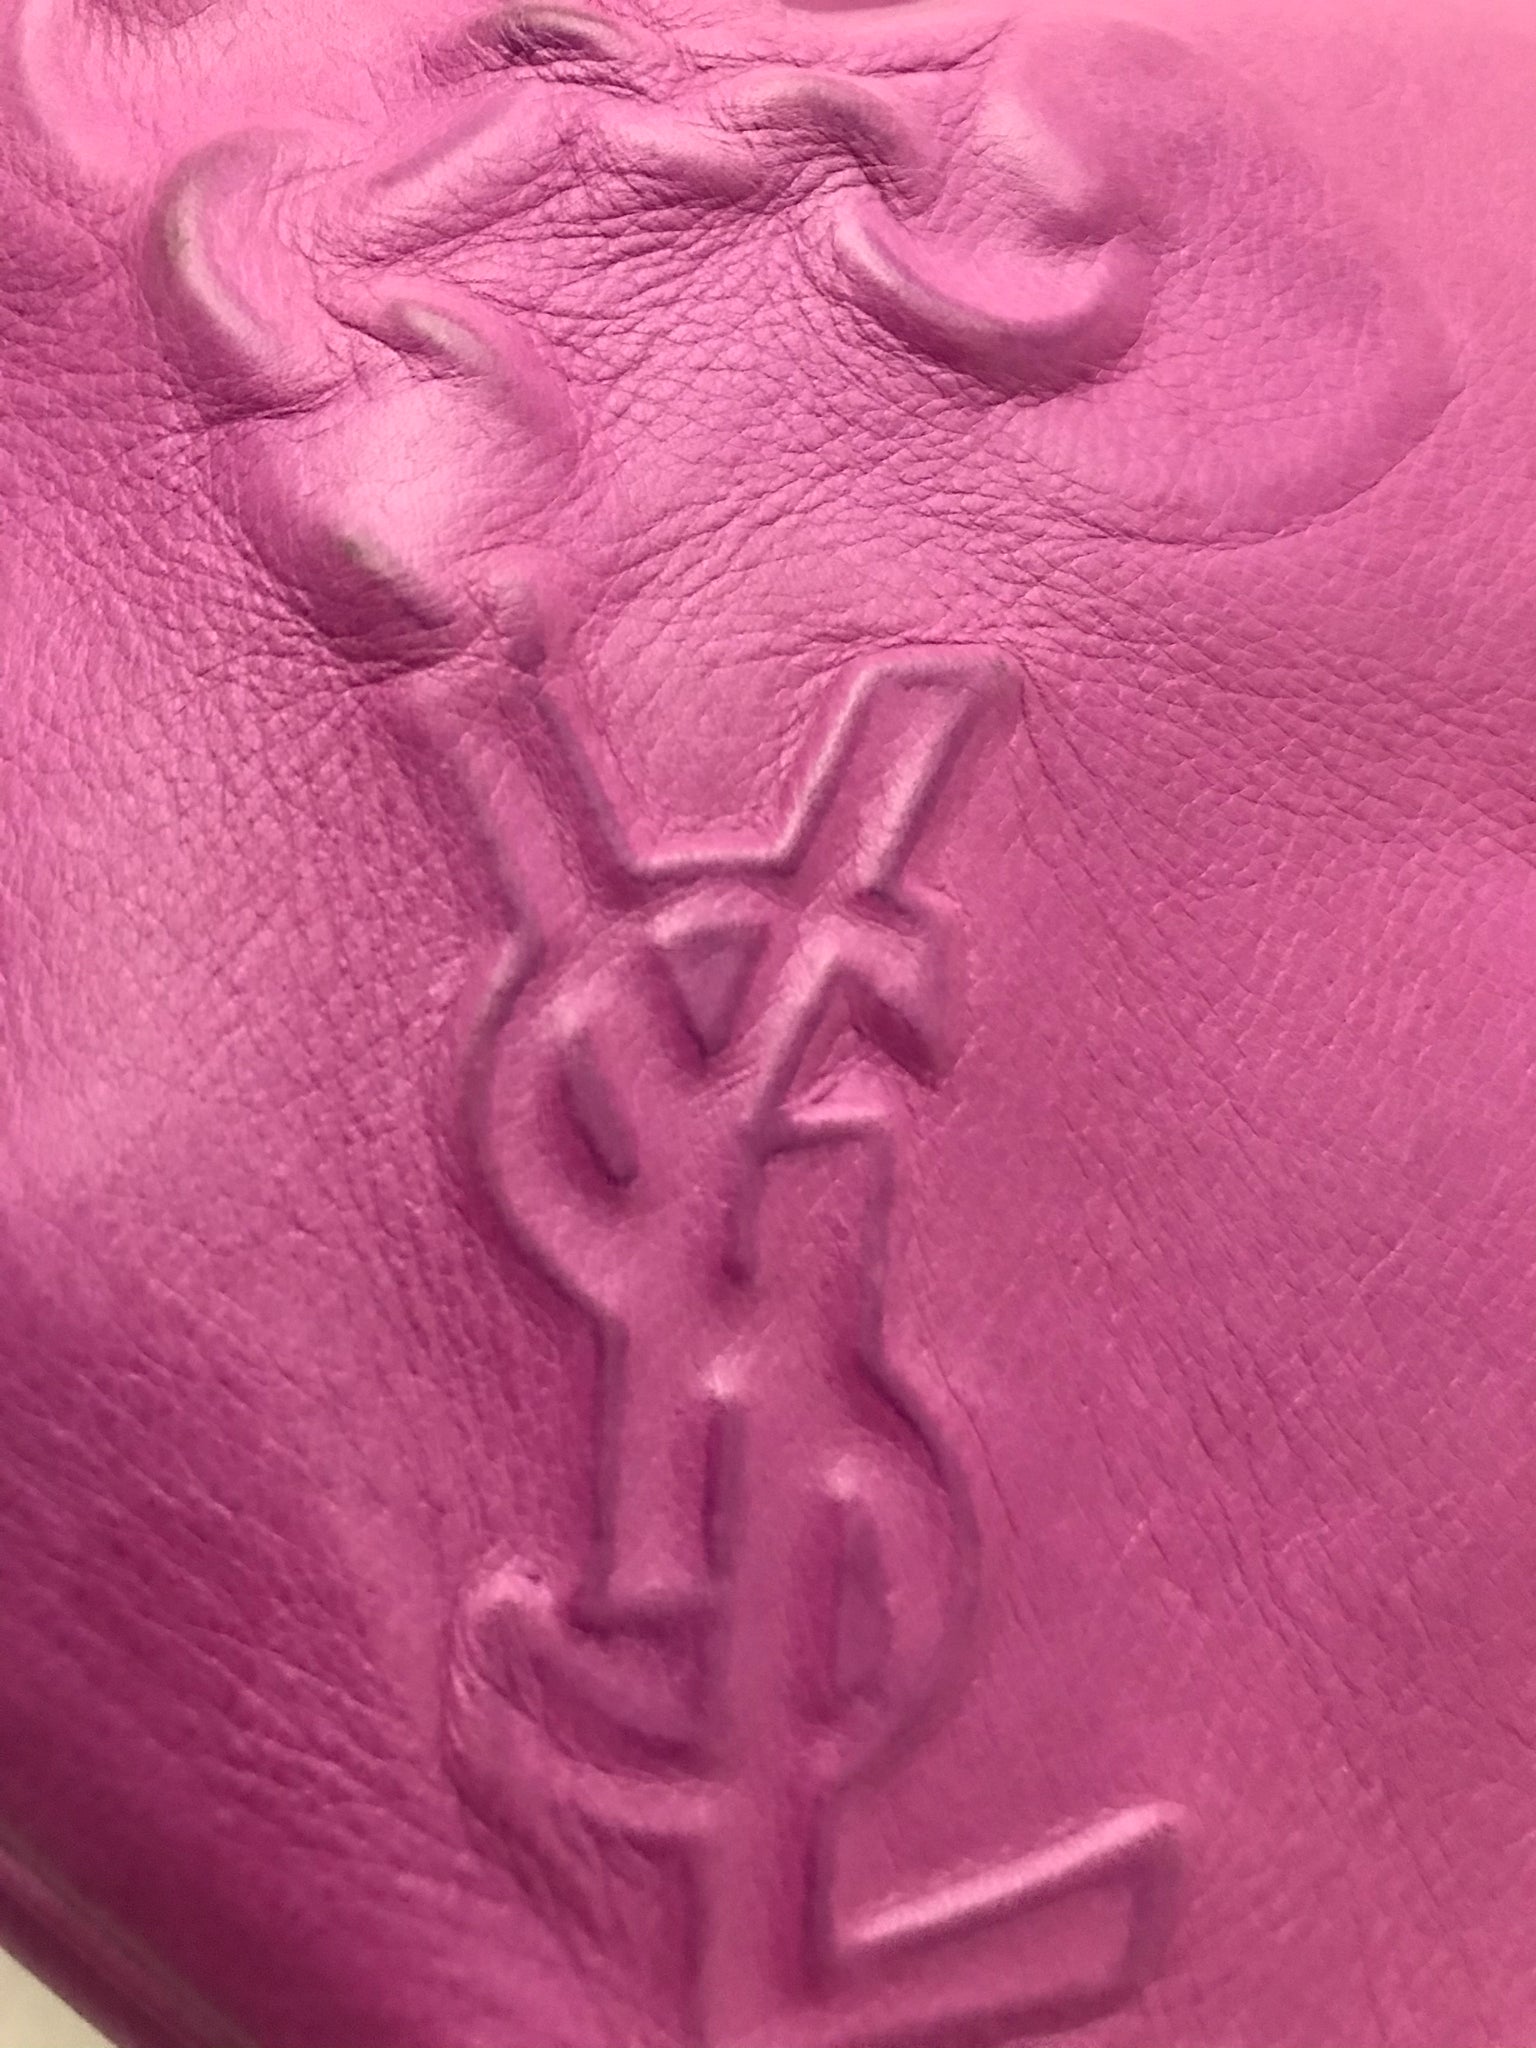 Isabella's Wardrobe Yves Saint Laurent Charm Tote Bag.